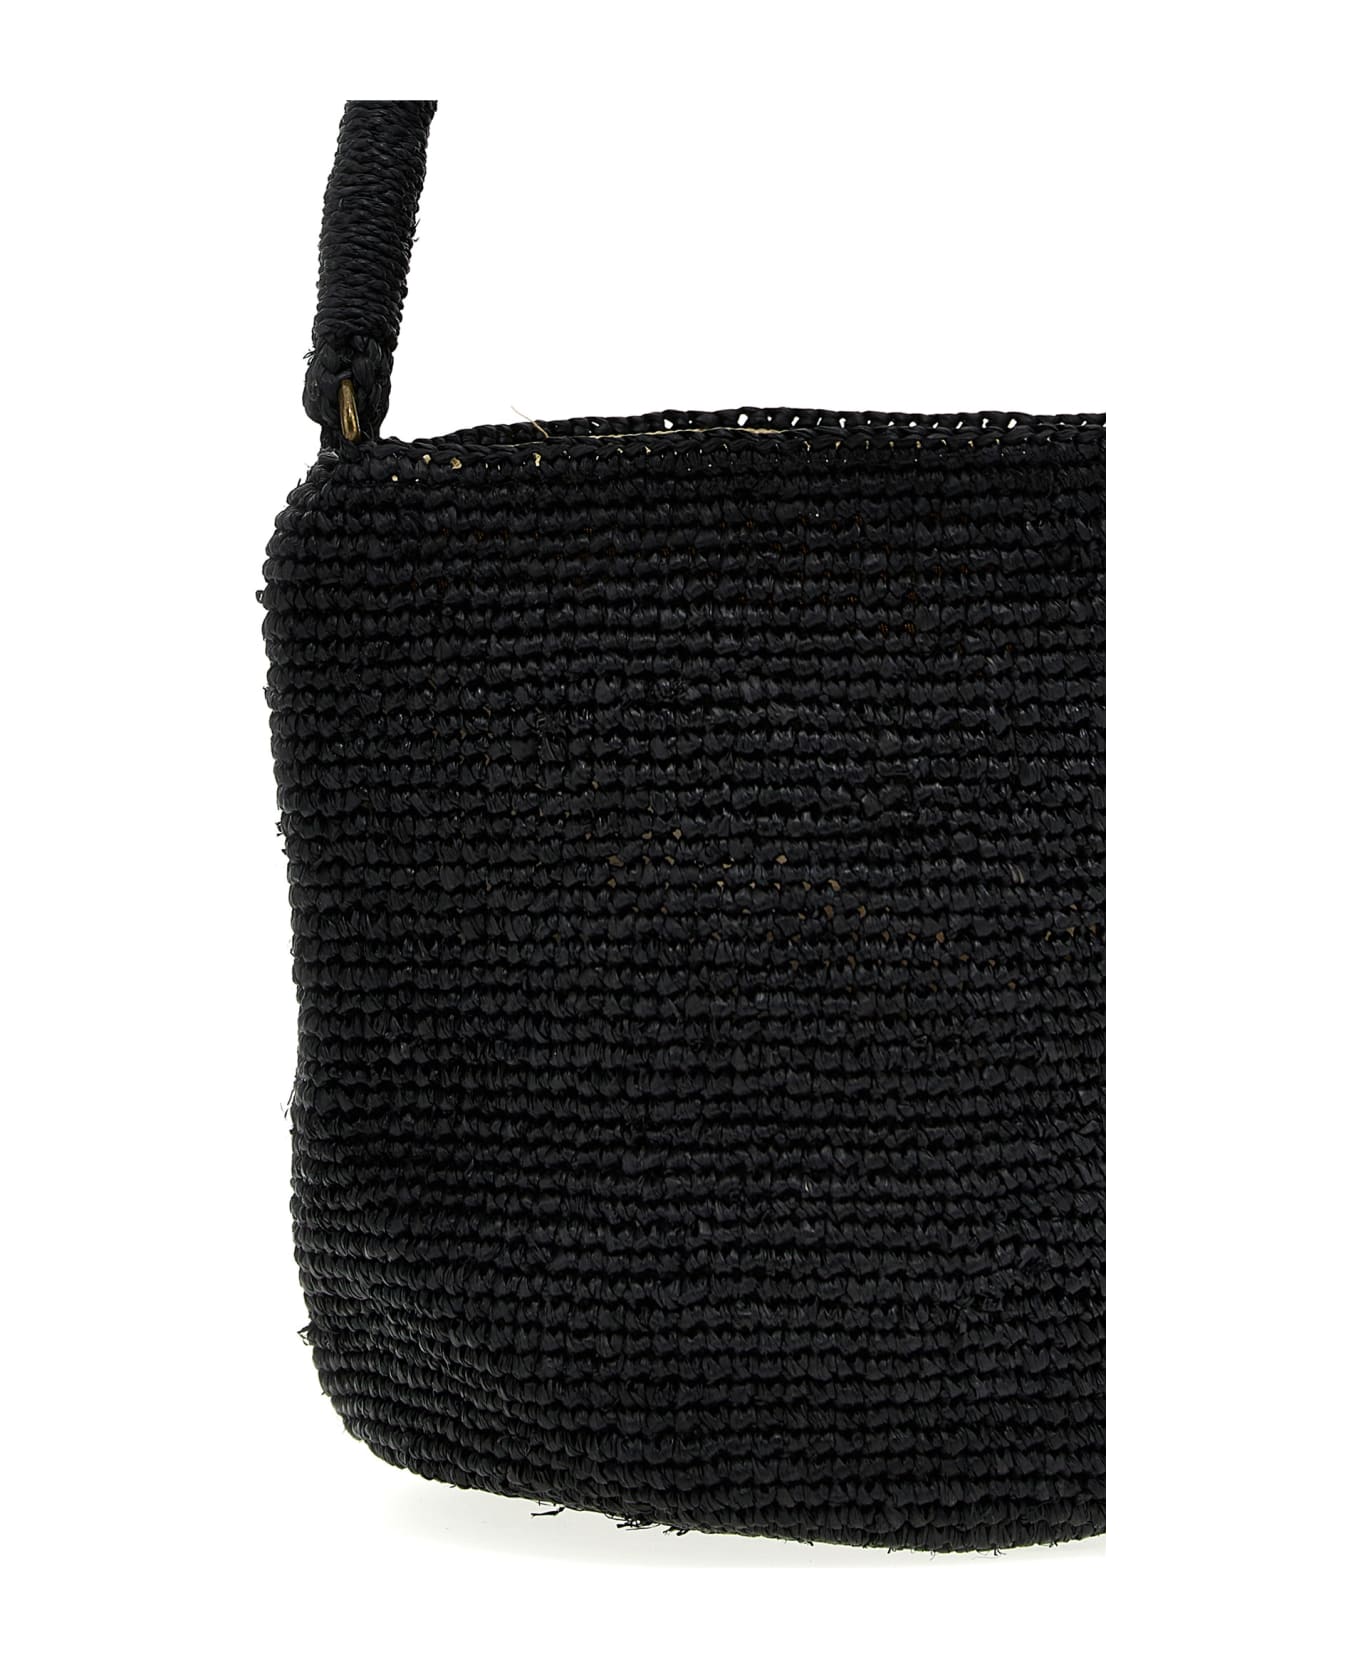 Ibeliv 'siny' Handbag - Black   トートバッグ